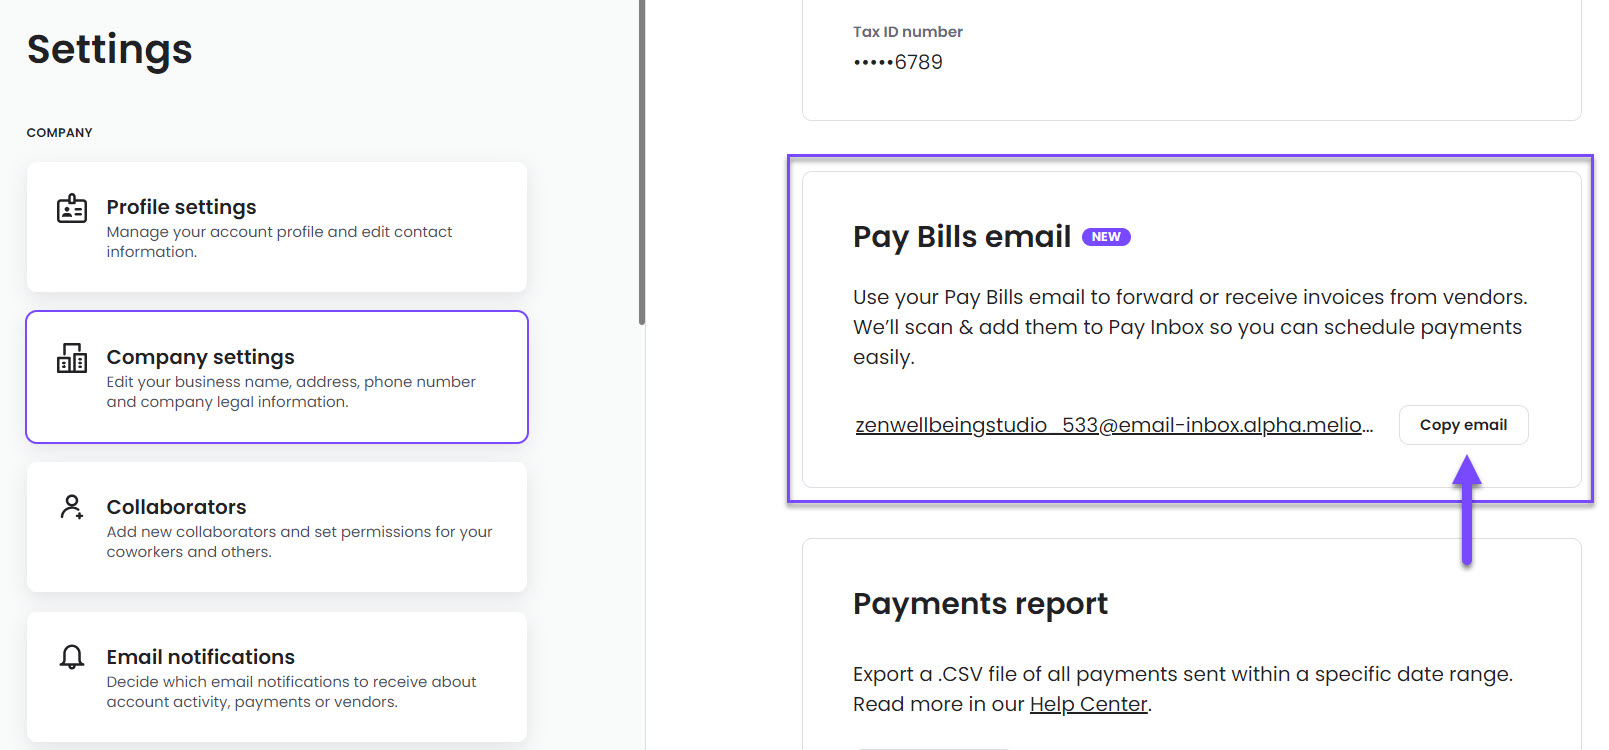 Settings- Company settings- Pay Bills email.jpg